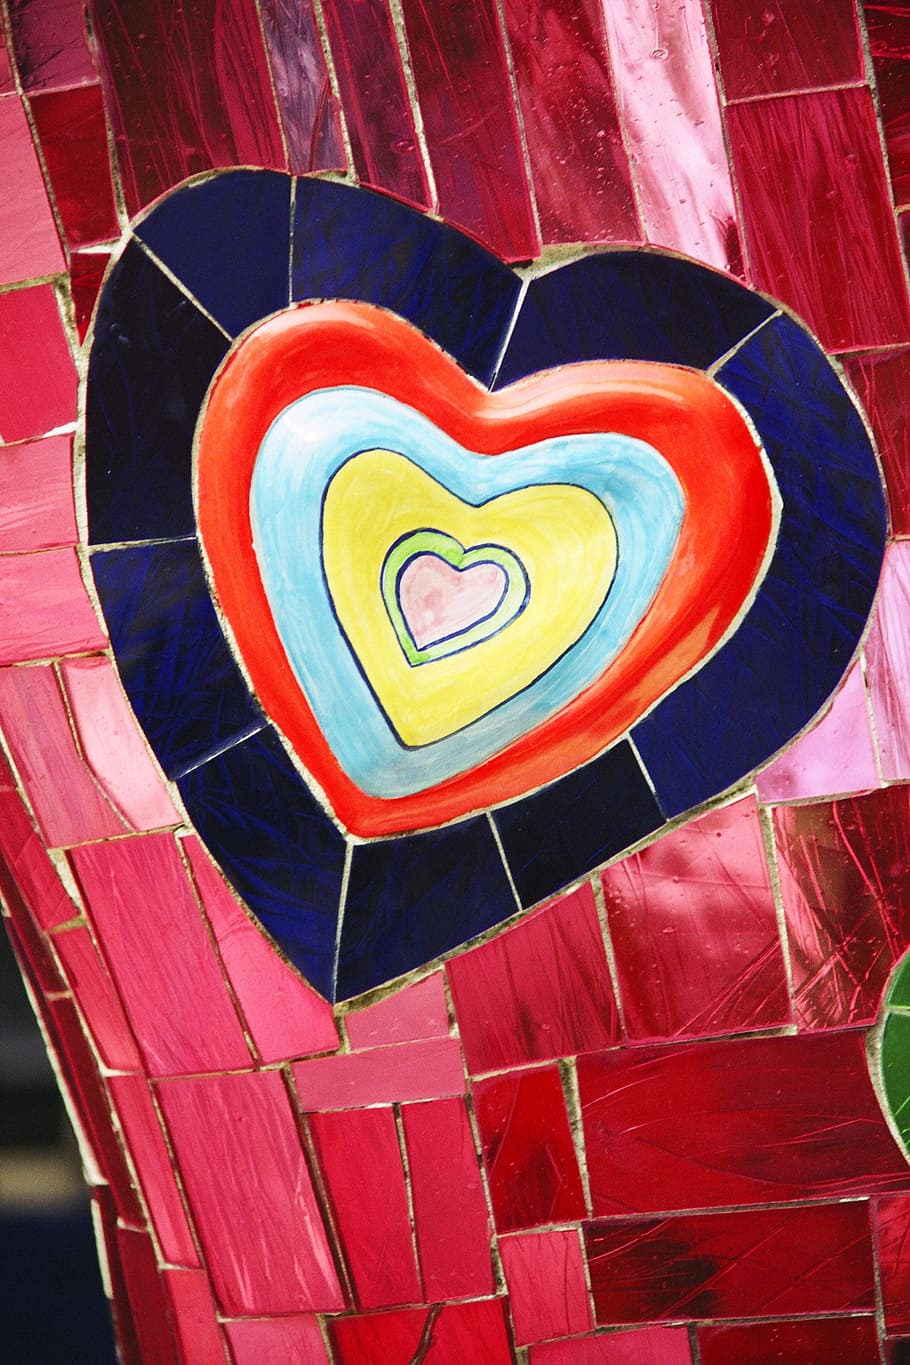 blue, red, yellow, heart painting, niki de saint phalle, art, artist, sculpture, tuscany, capalbio